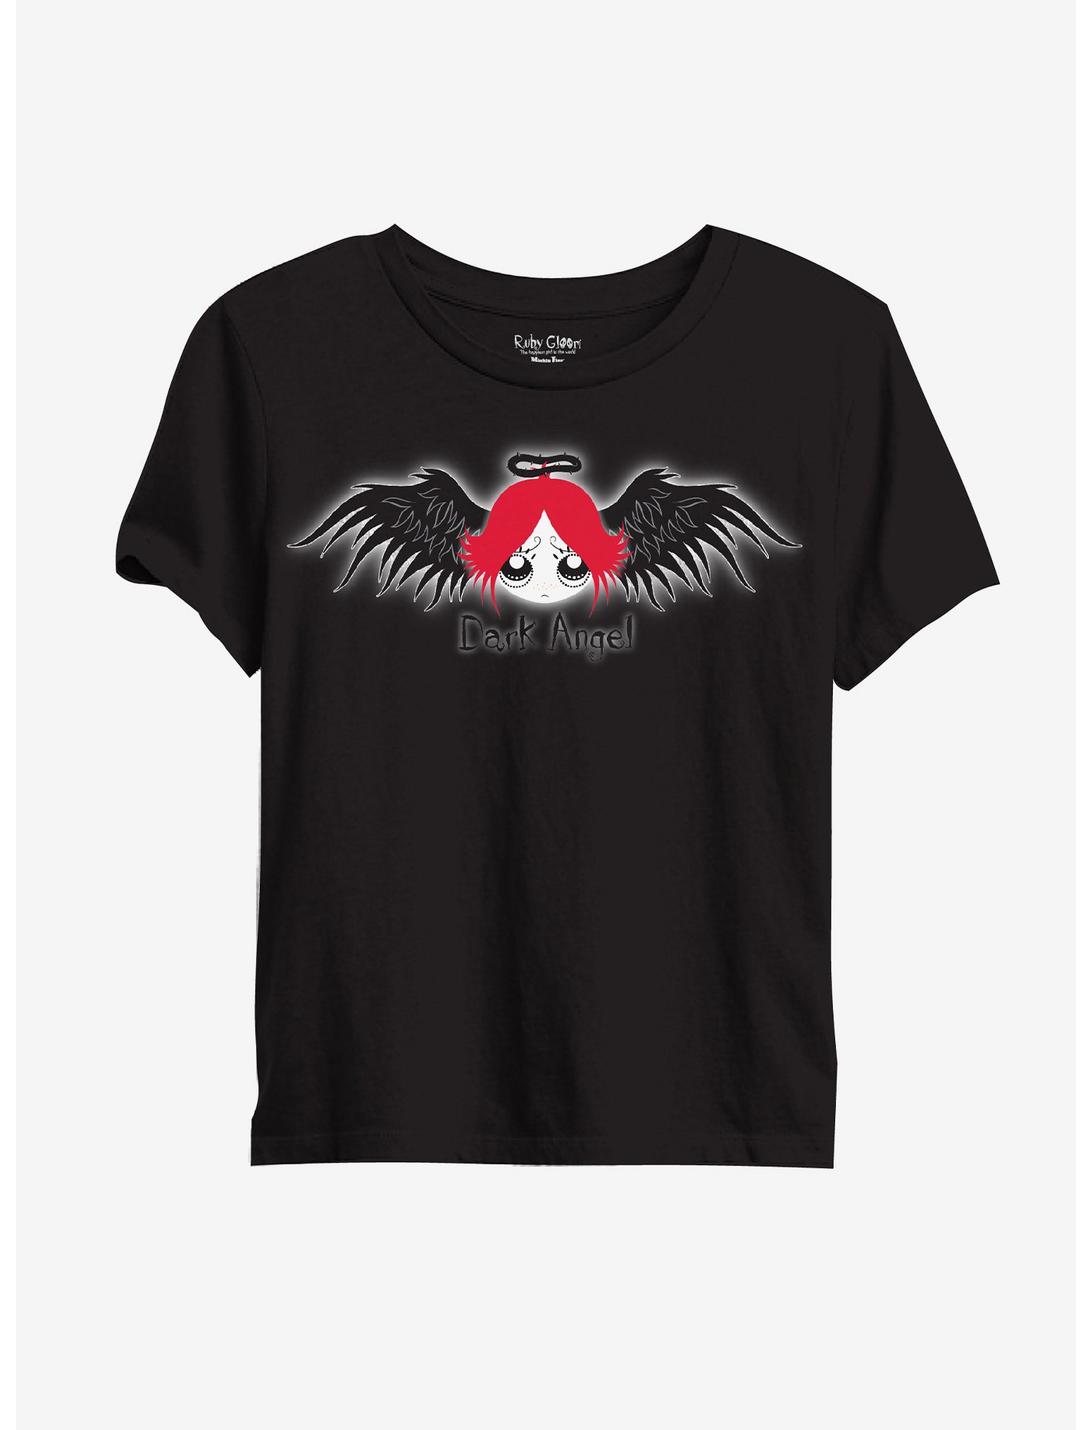 Ruby Gloom Dark Angel Boyfriend Fit Girls T-Shirt | Hot Topic